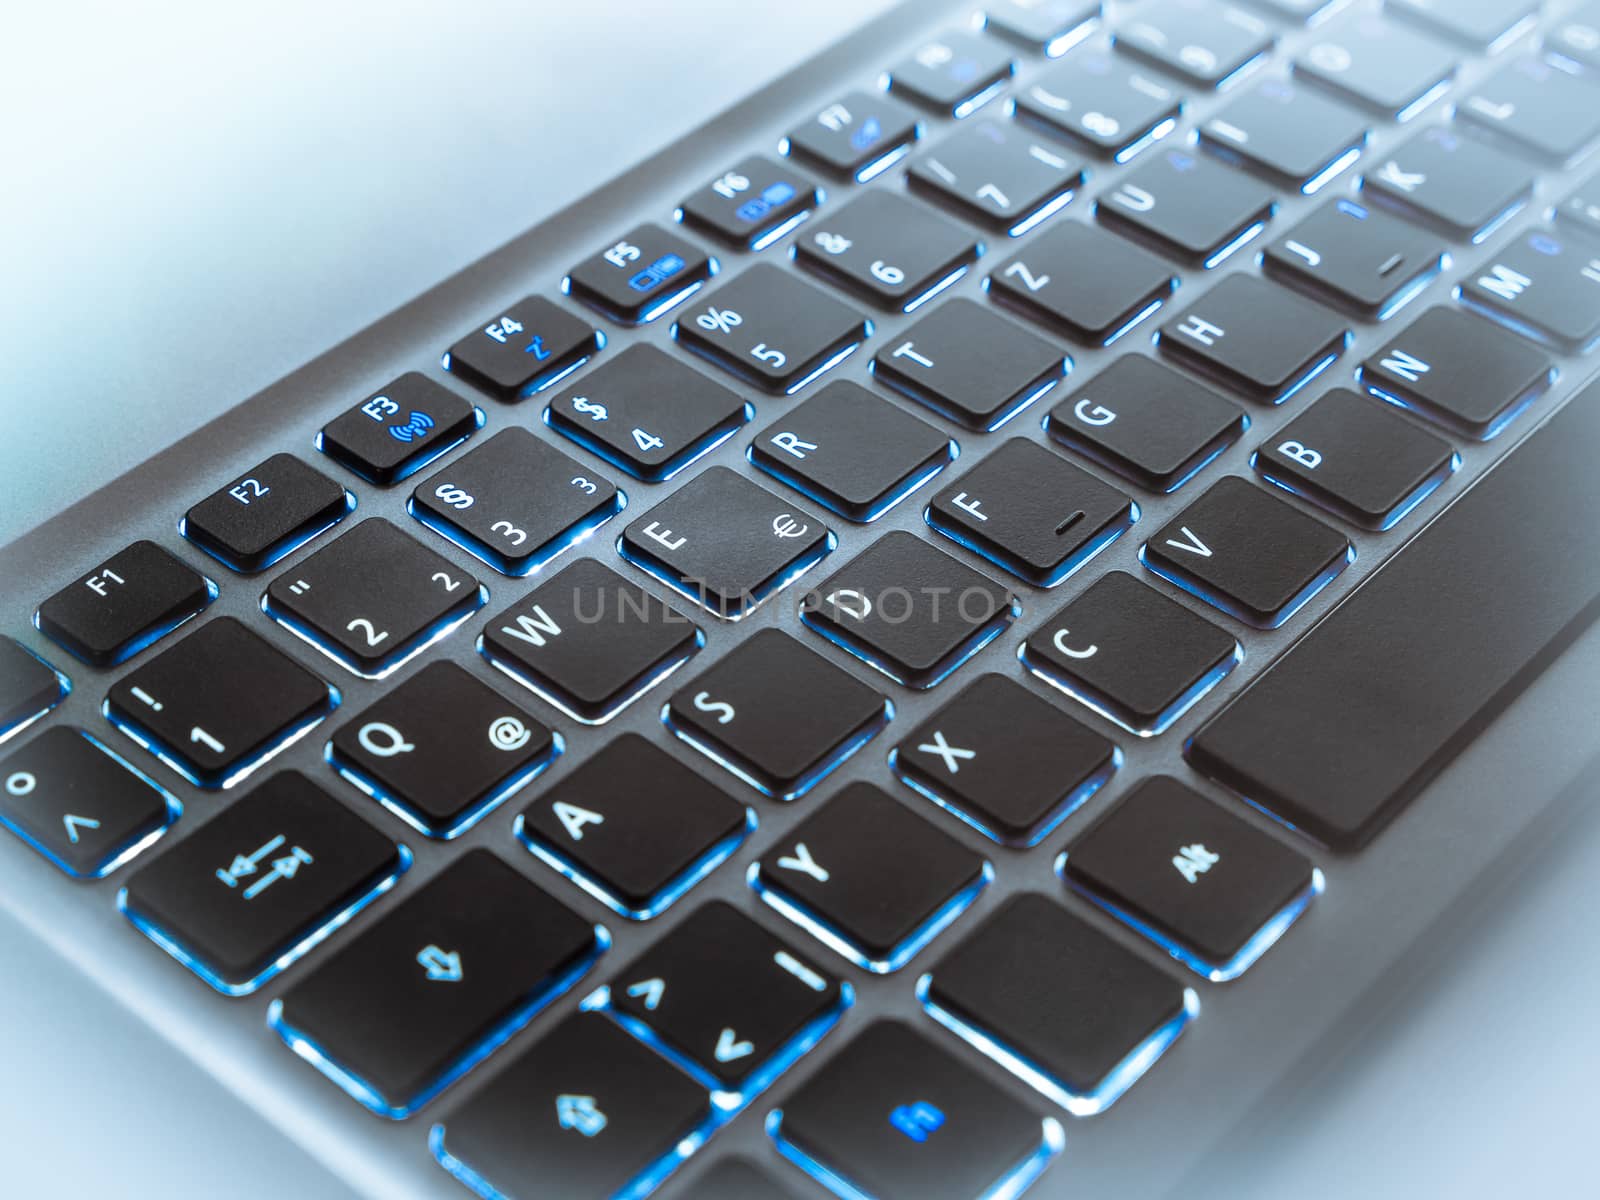 Keyboard of a laptop